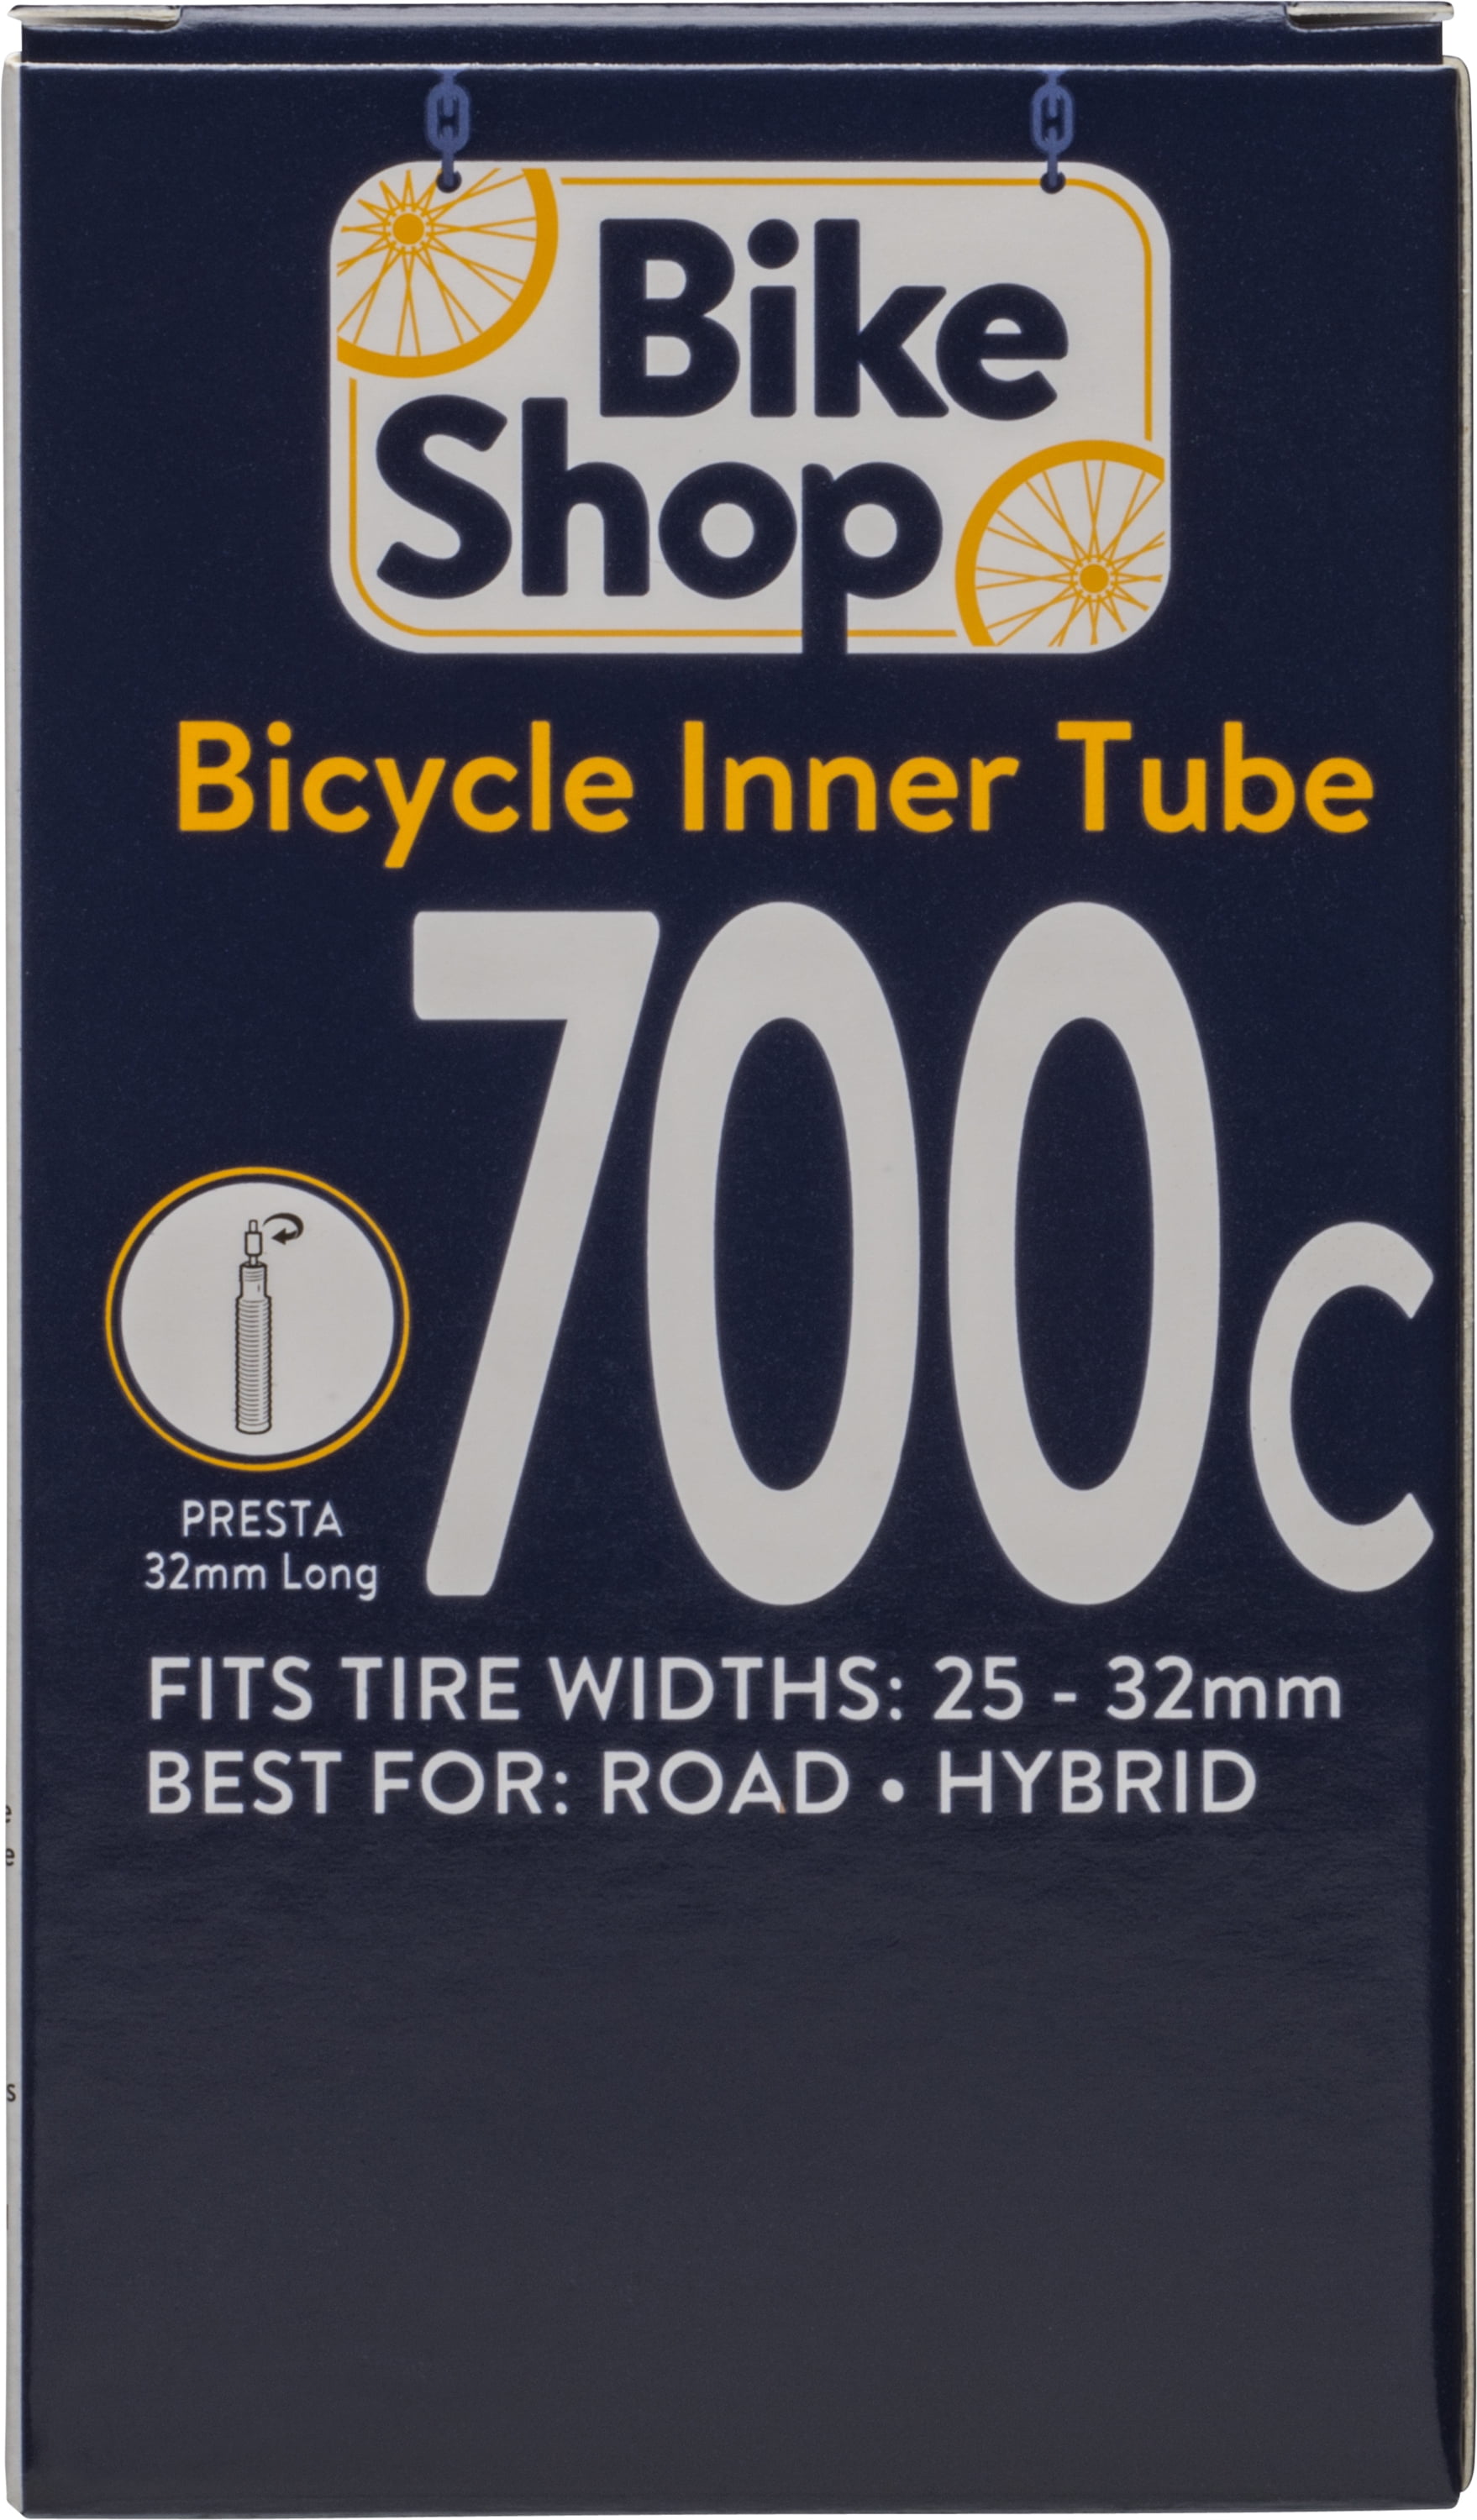 Details about   Shhrader Bike Inner Tube 20" 33mm x 2 